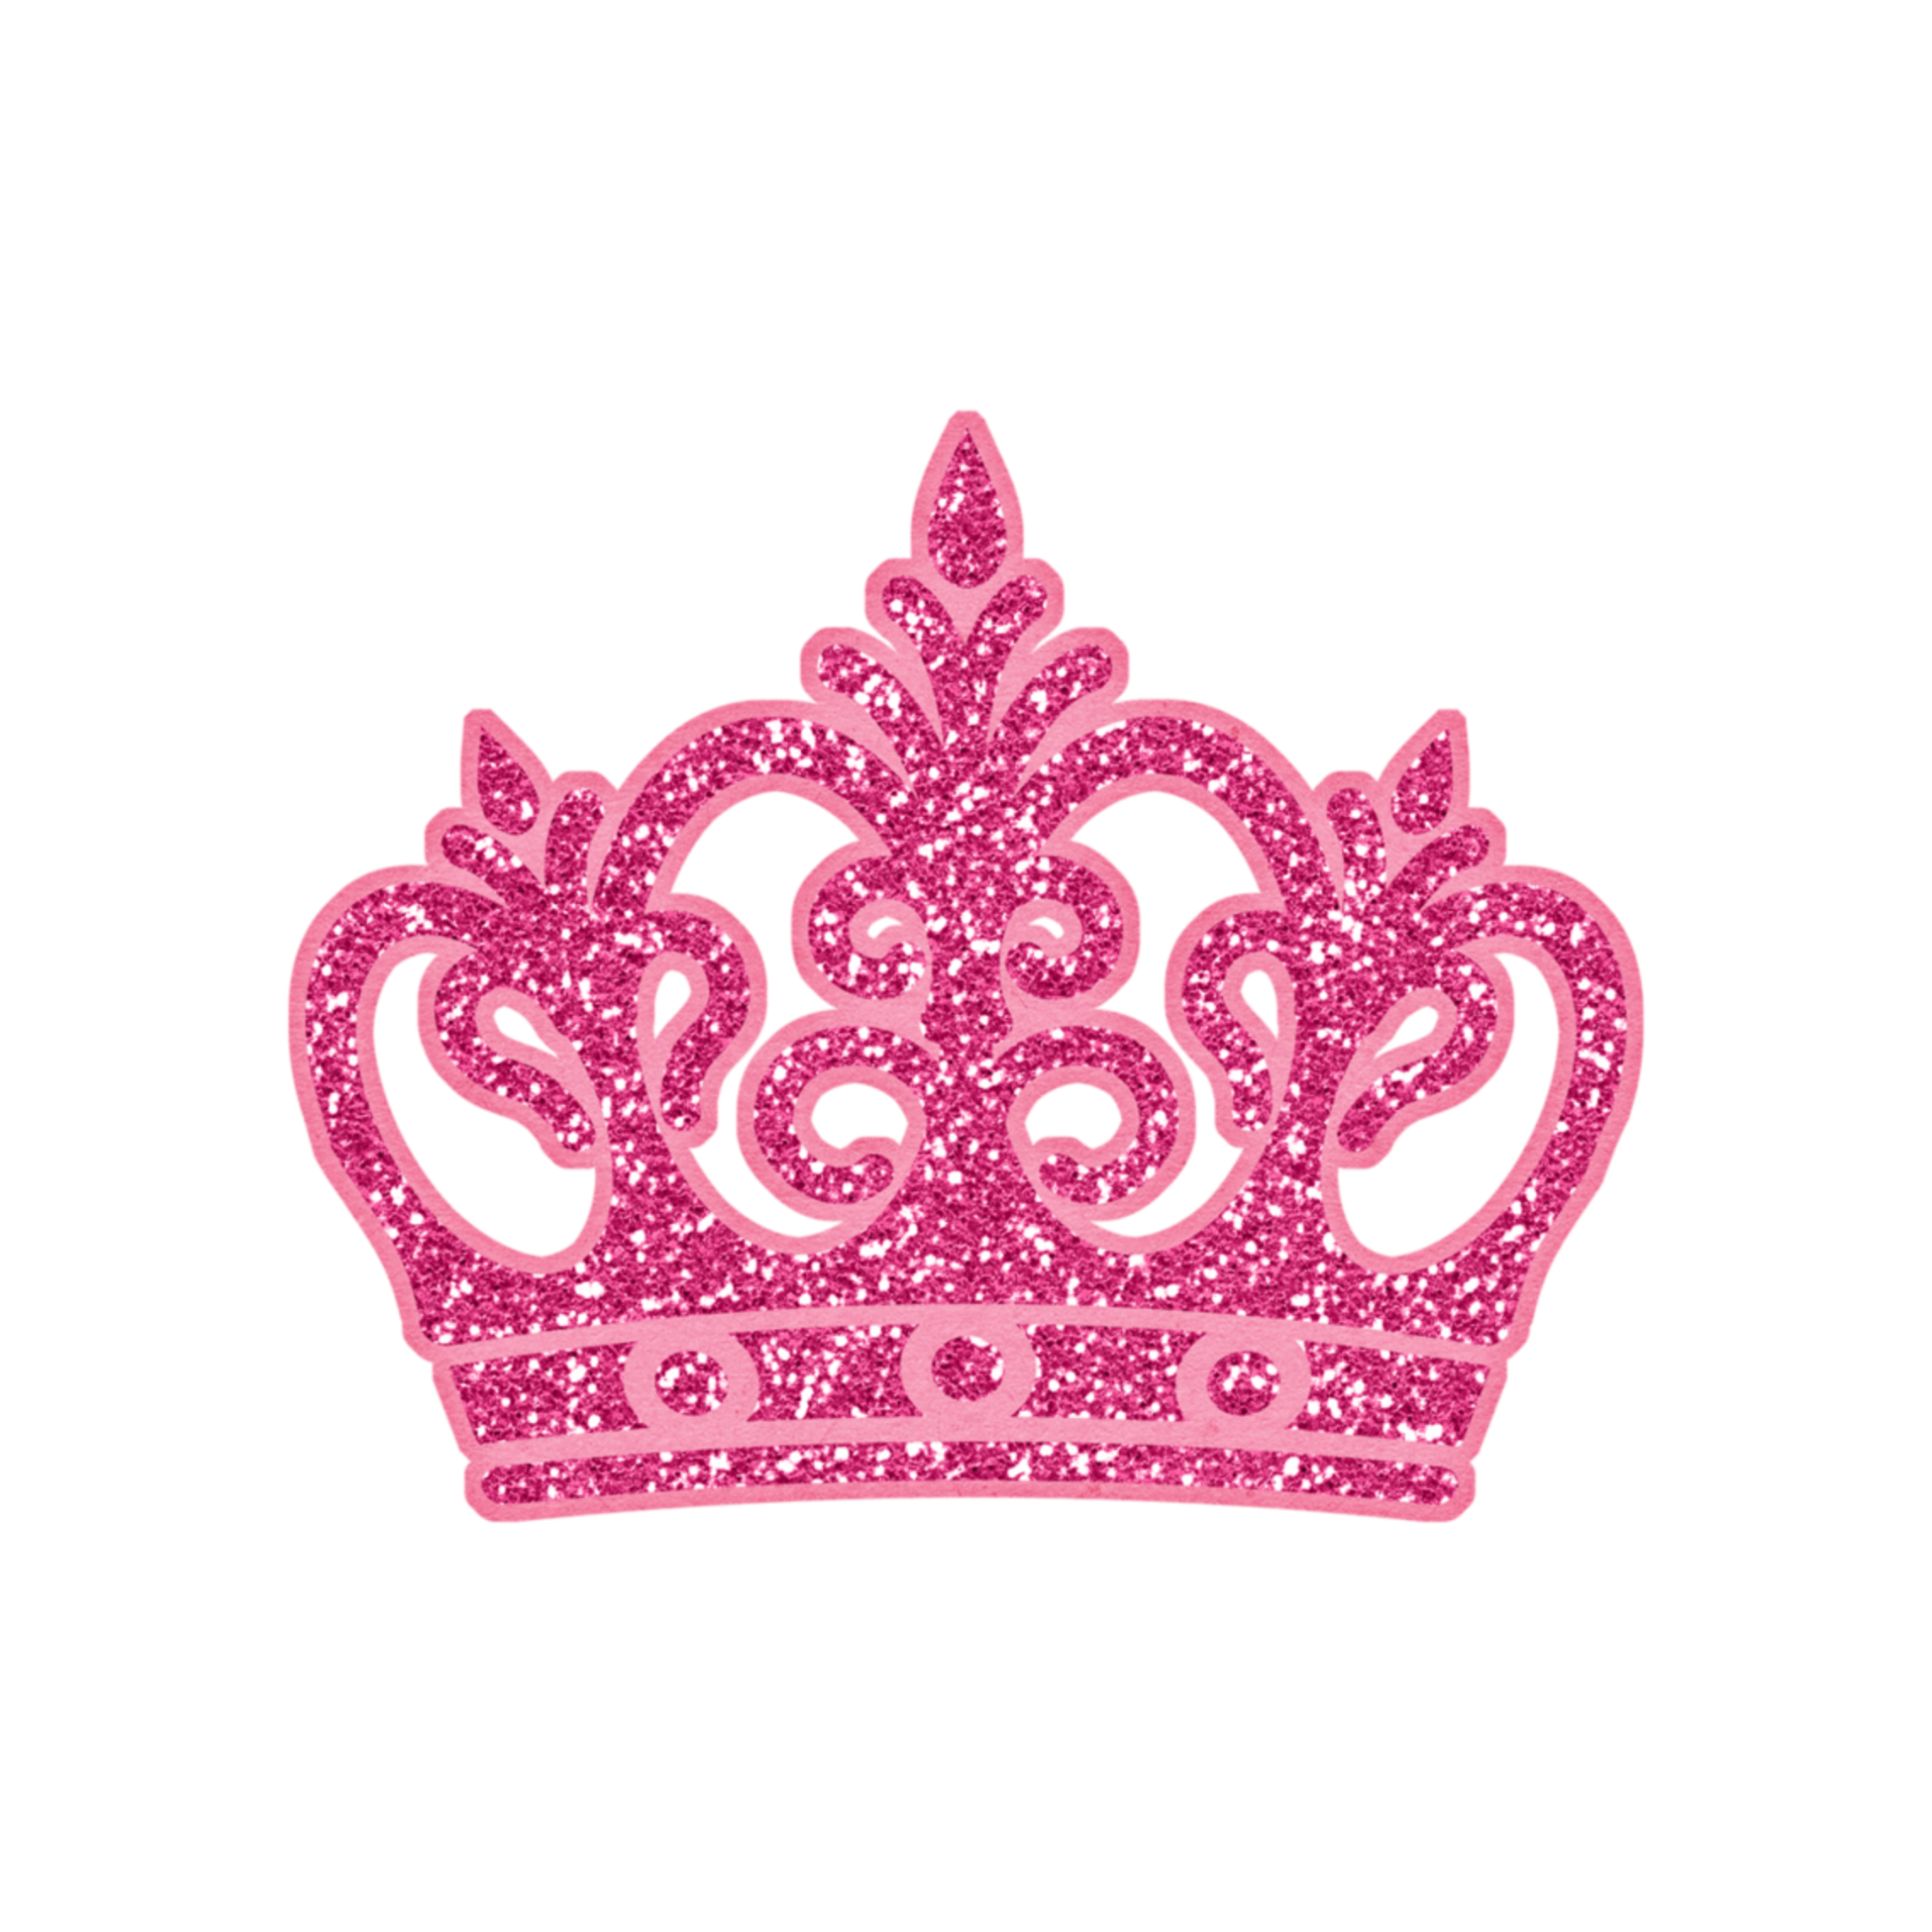 mq pink glitter crown princess - Sticker by Marras